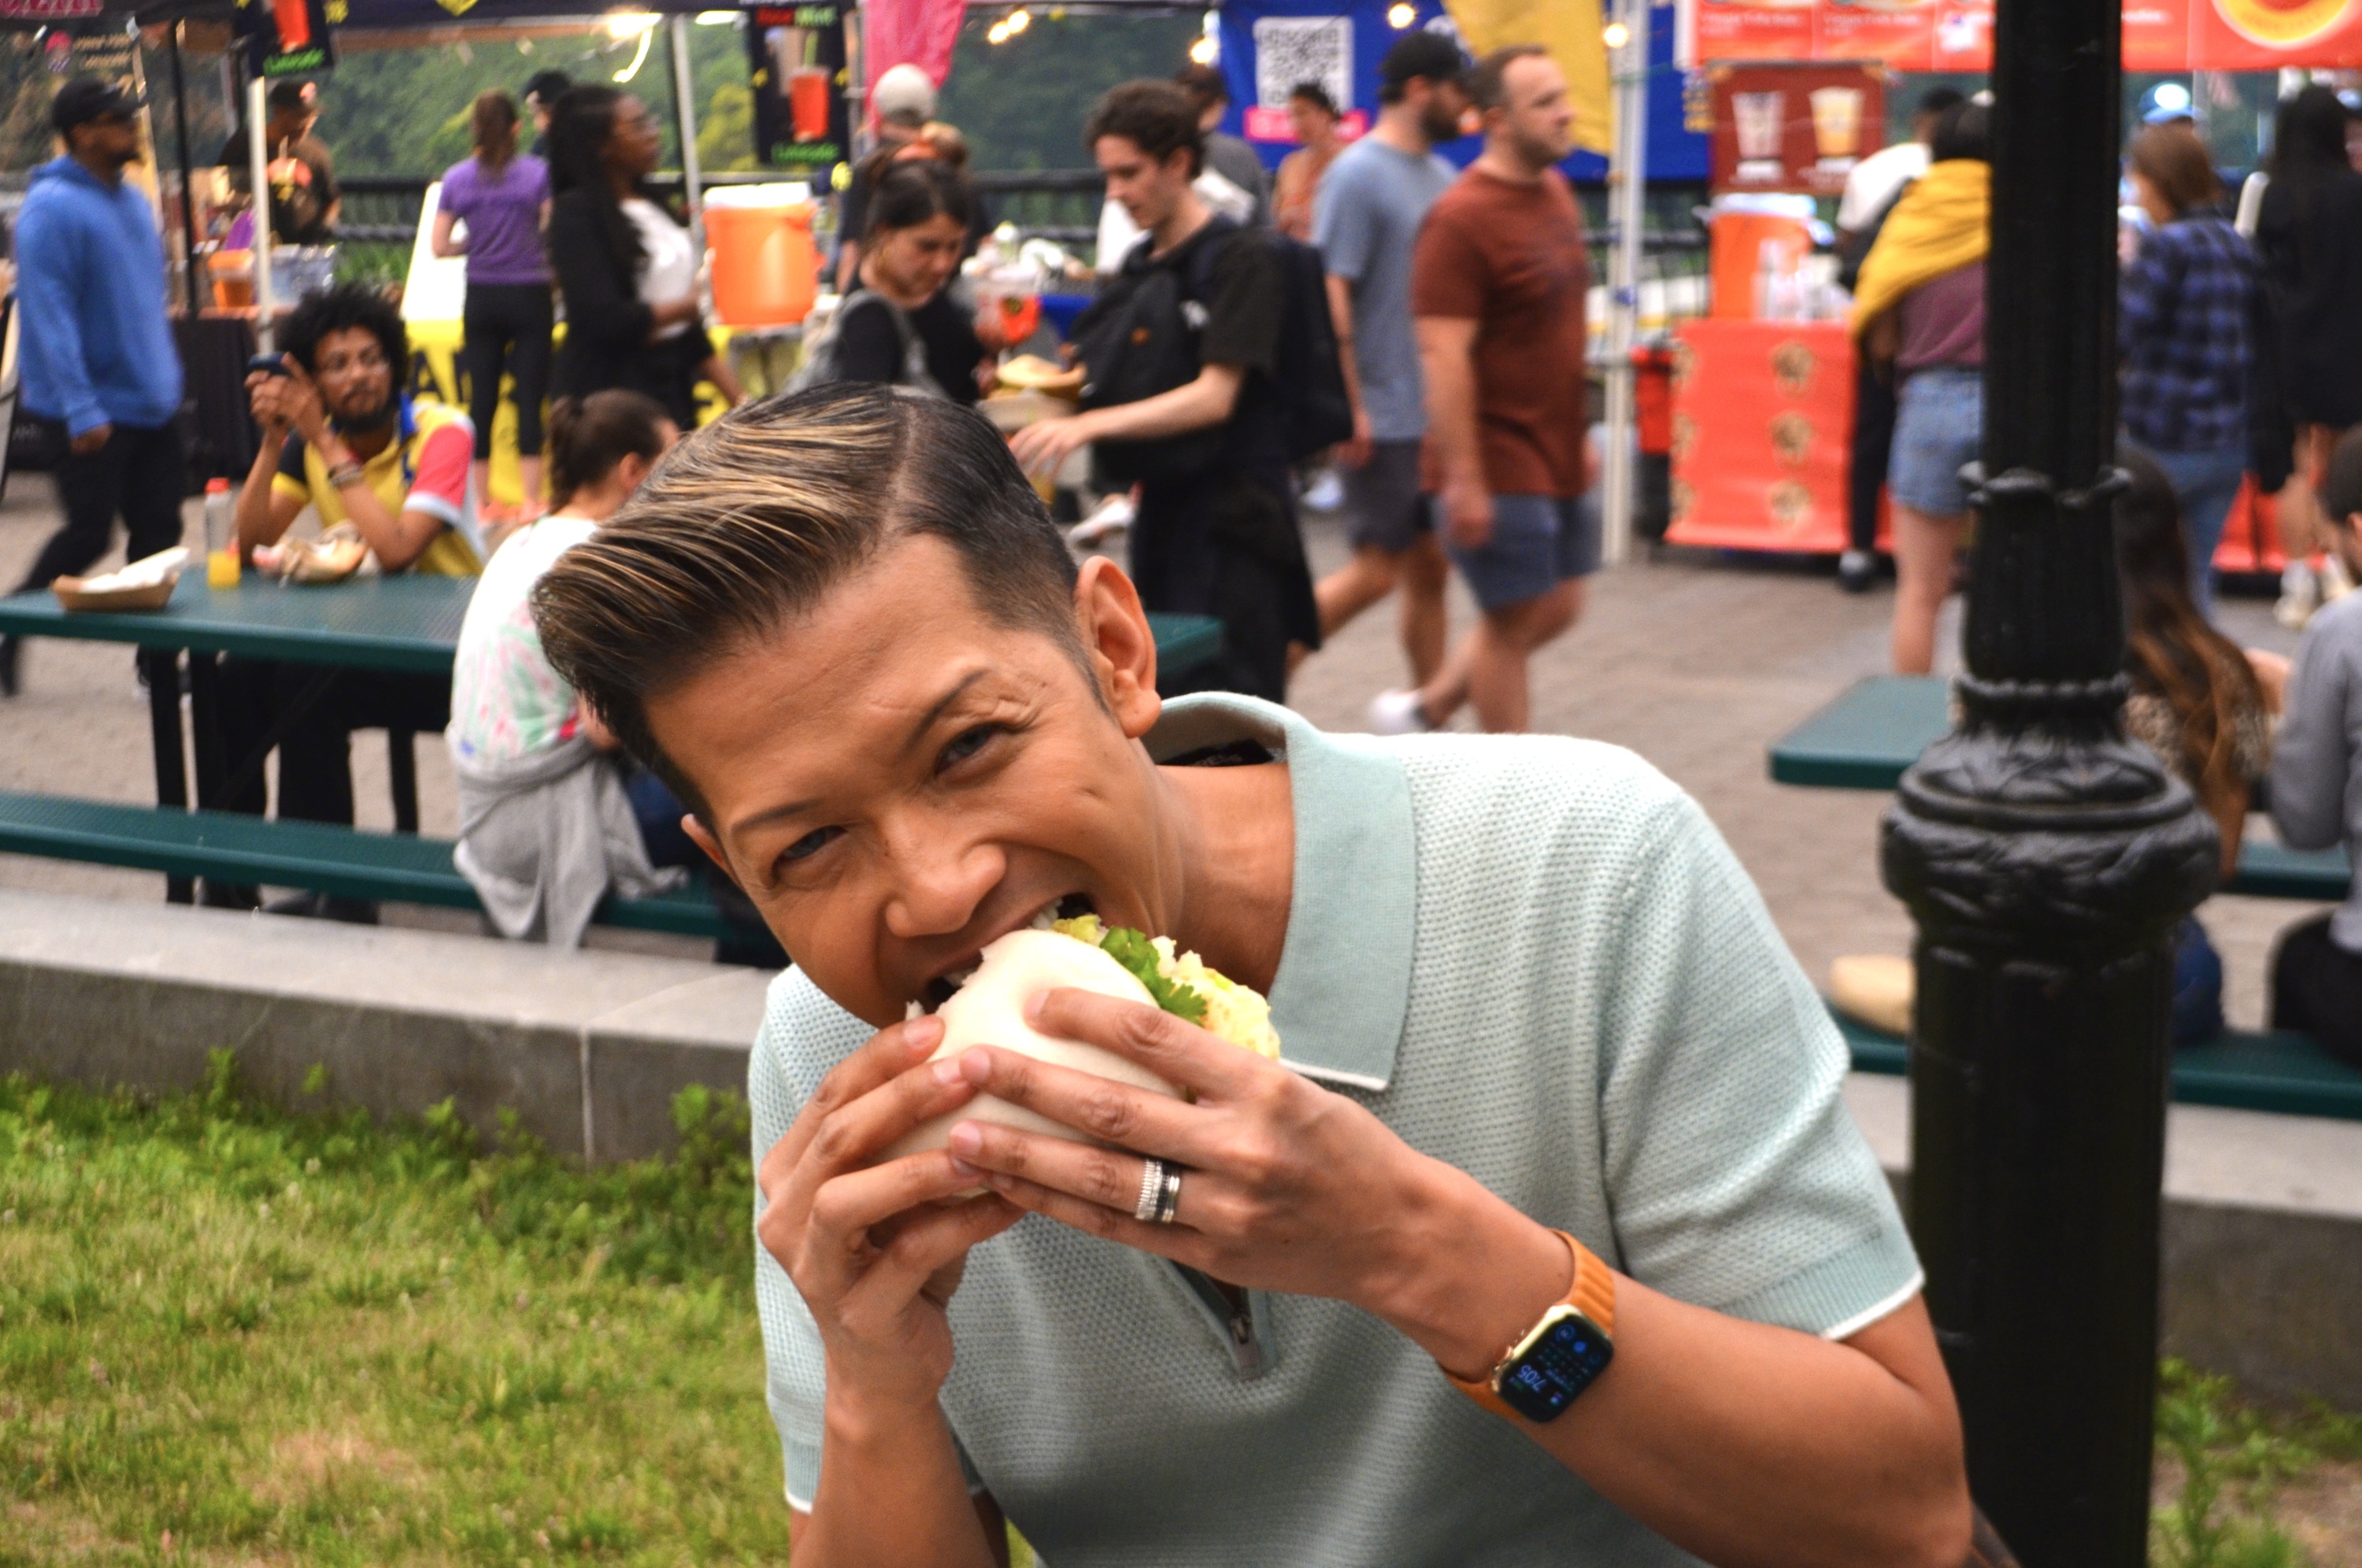 A man eats a sandwich.